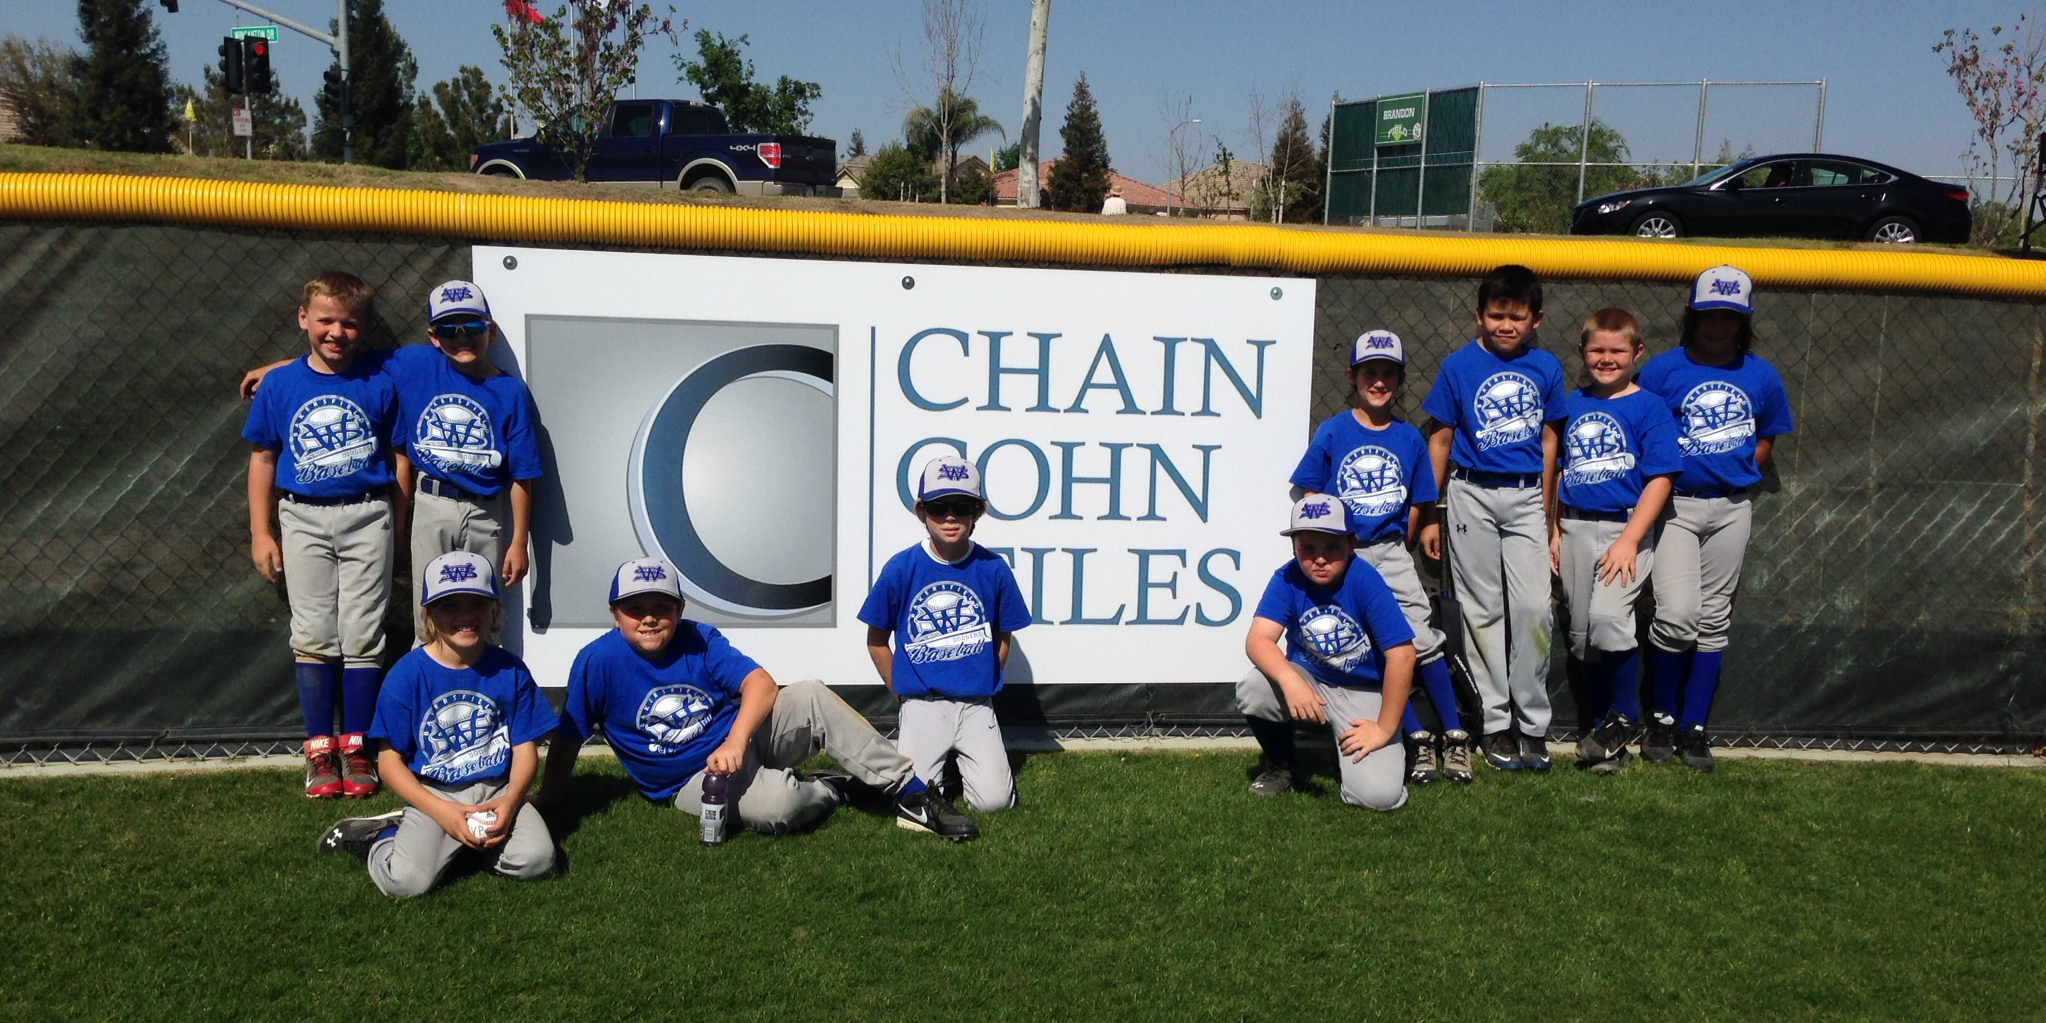 CCS supports local youth baseball programs